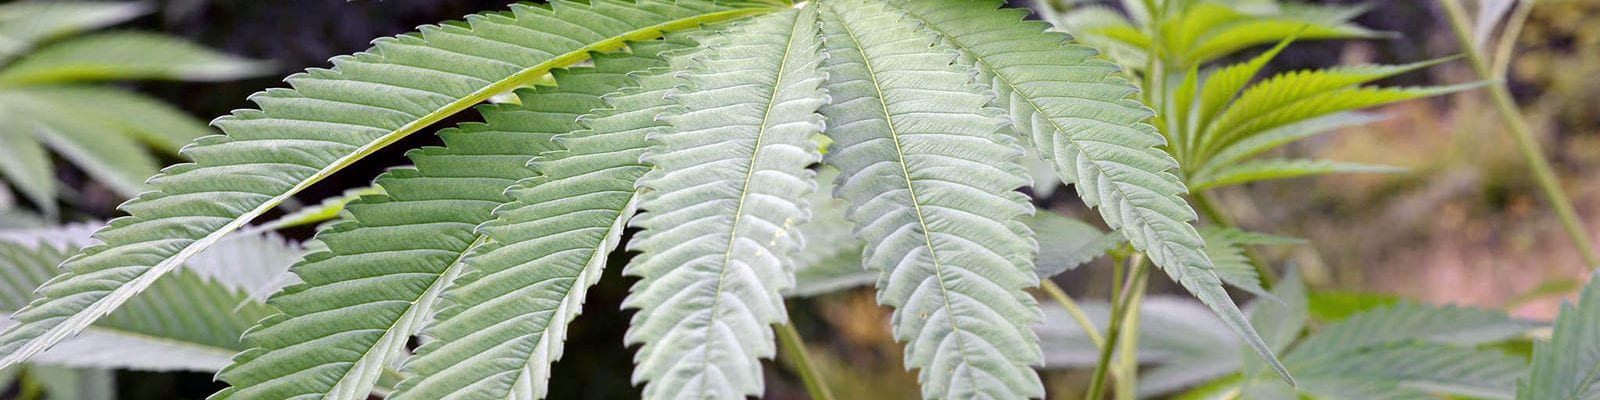 A wide fan leaf from a mature hemp plant.